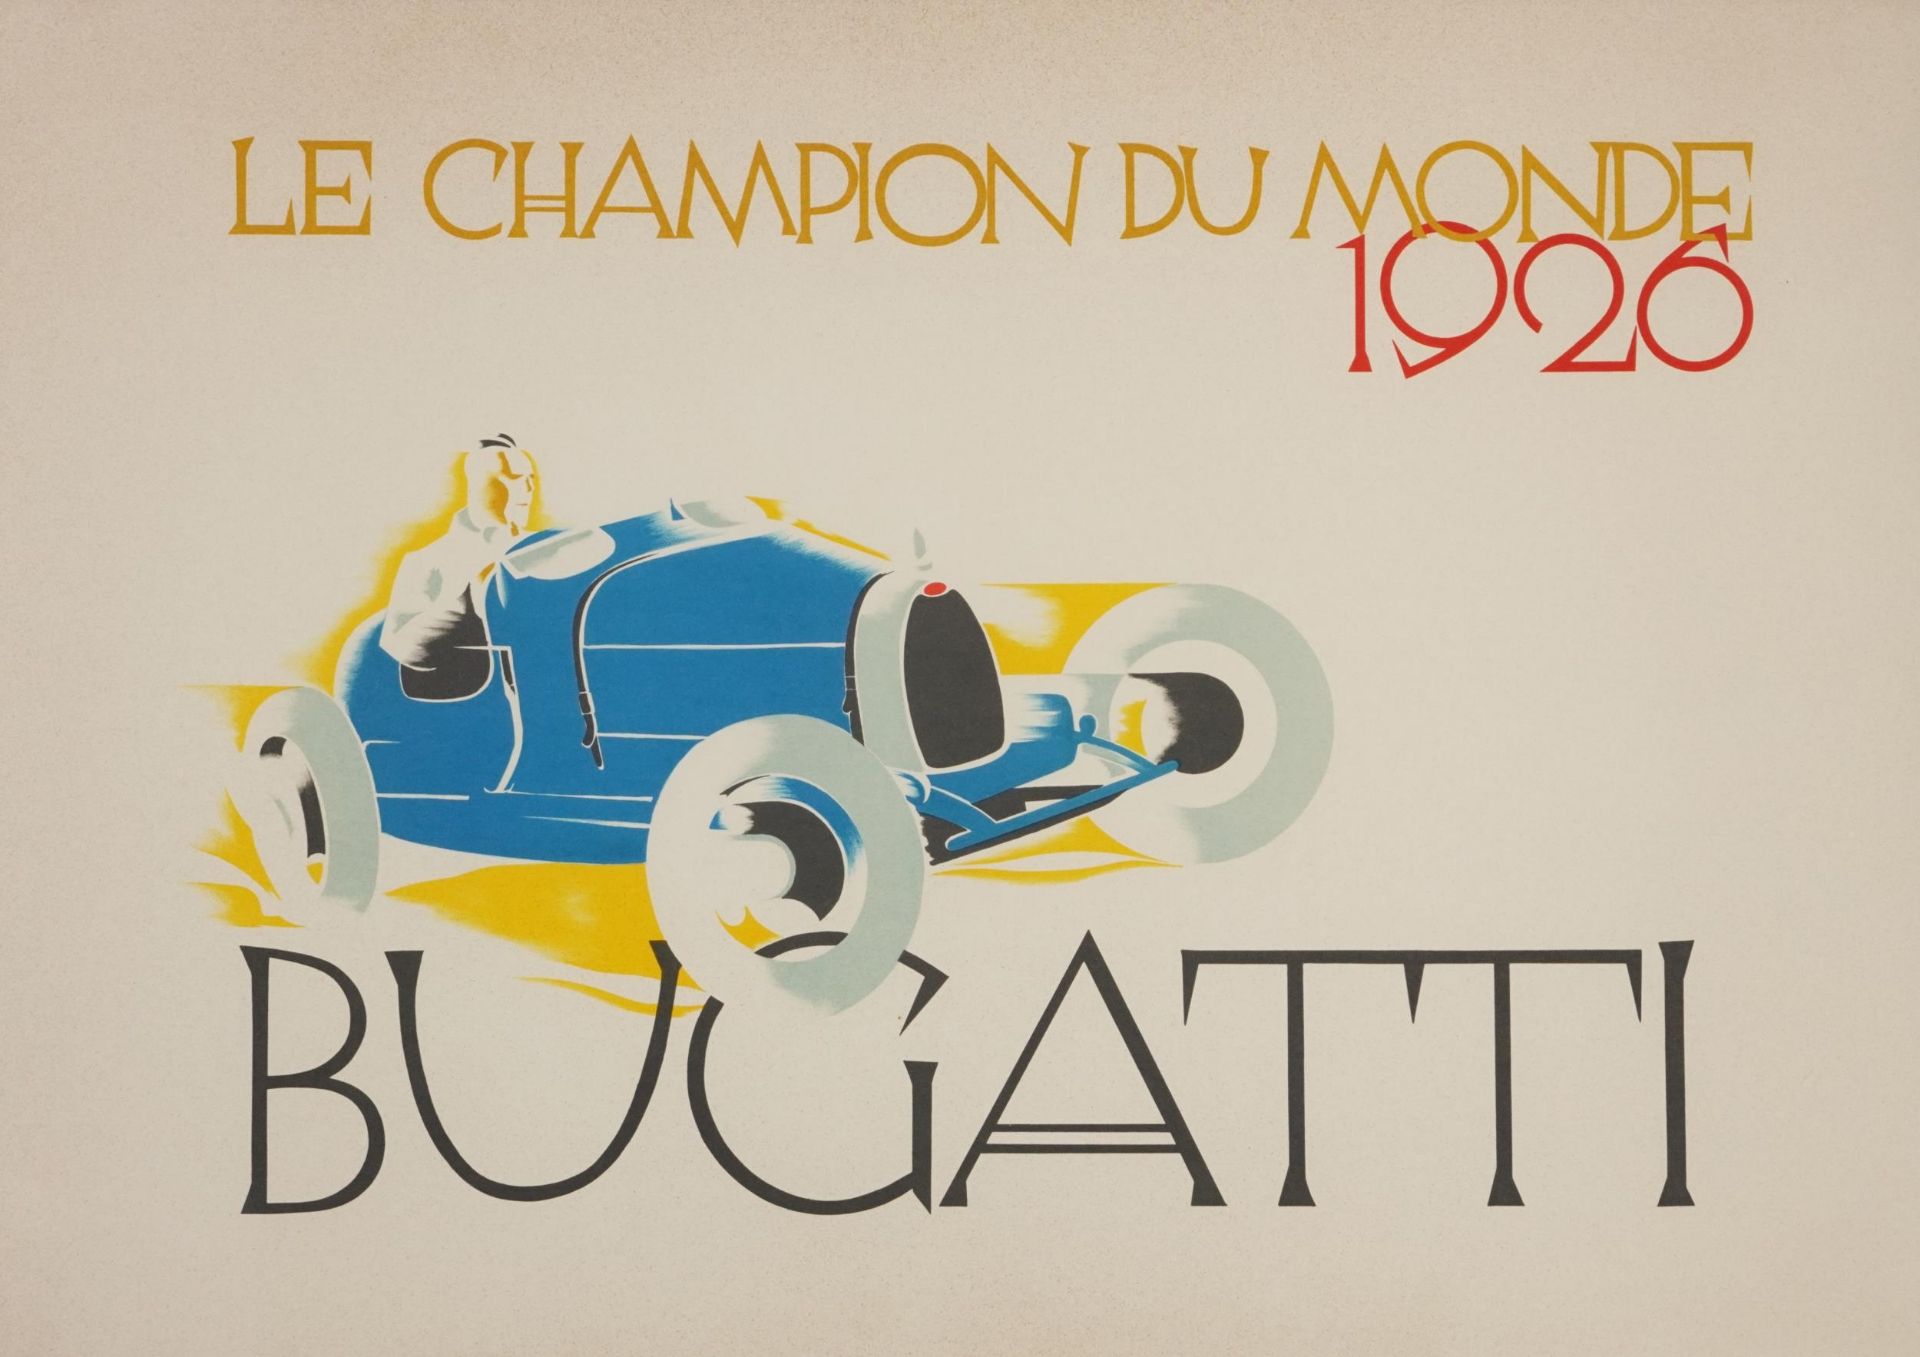 Le Champion du Monde 1926 Bugatti automobilia advertising poster, published Ernst Dryden Collection,